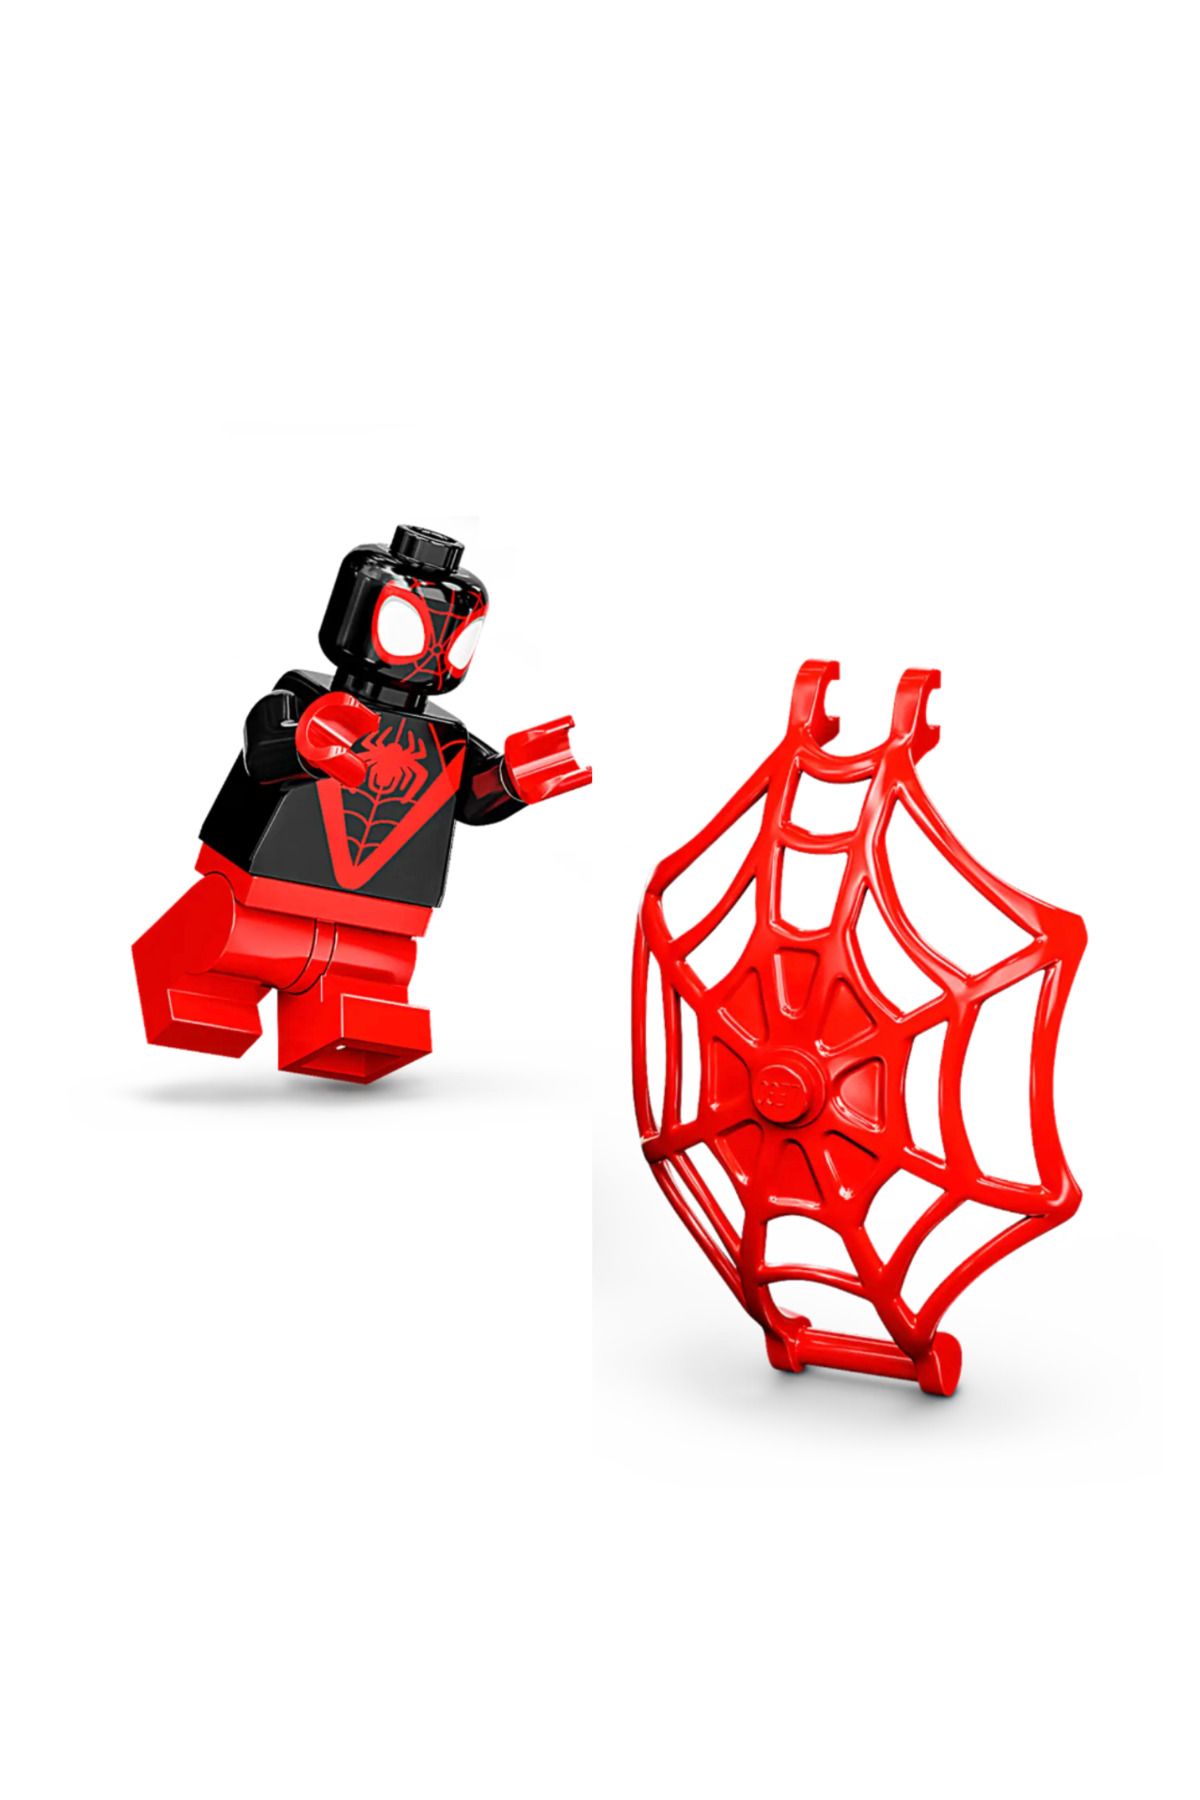 LEGO Marvel Spider-Man (Miles Morales) Minifigure